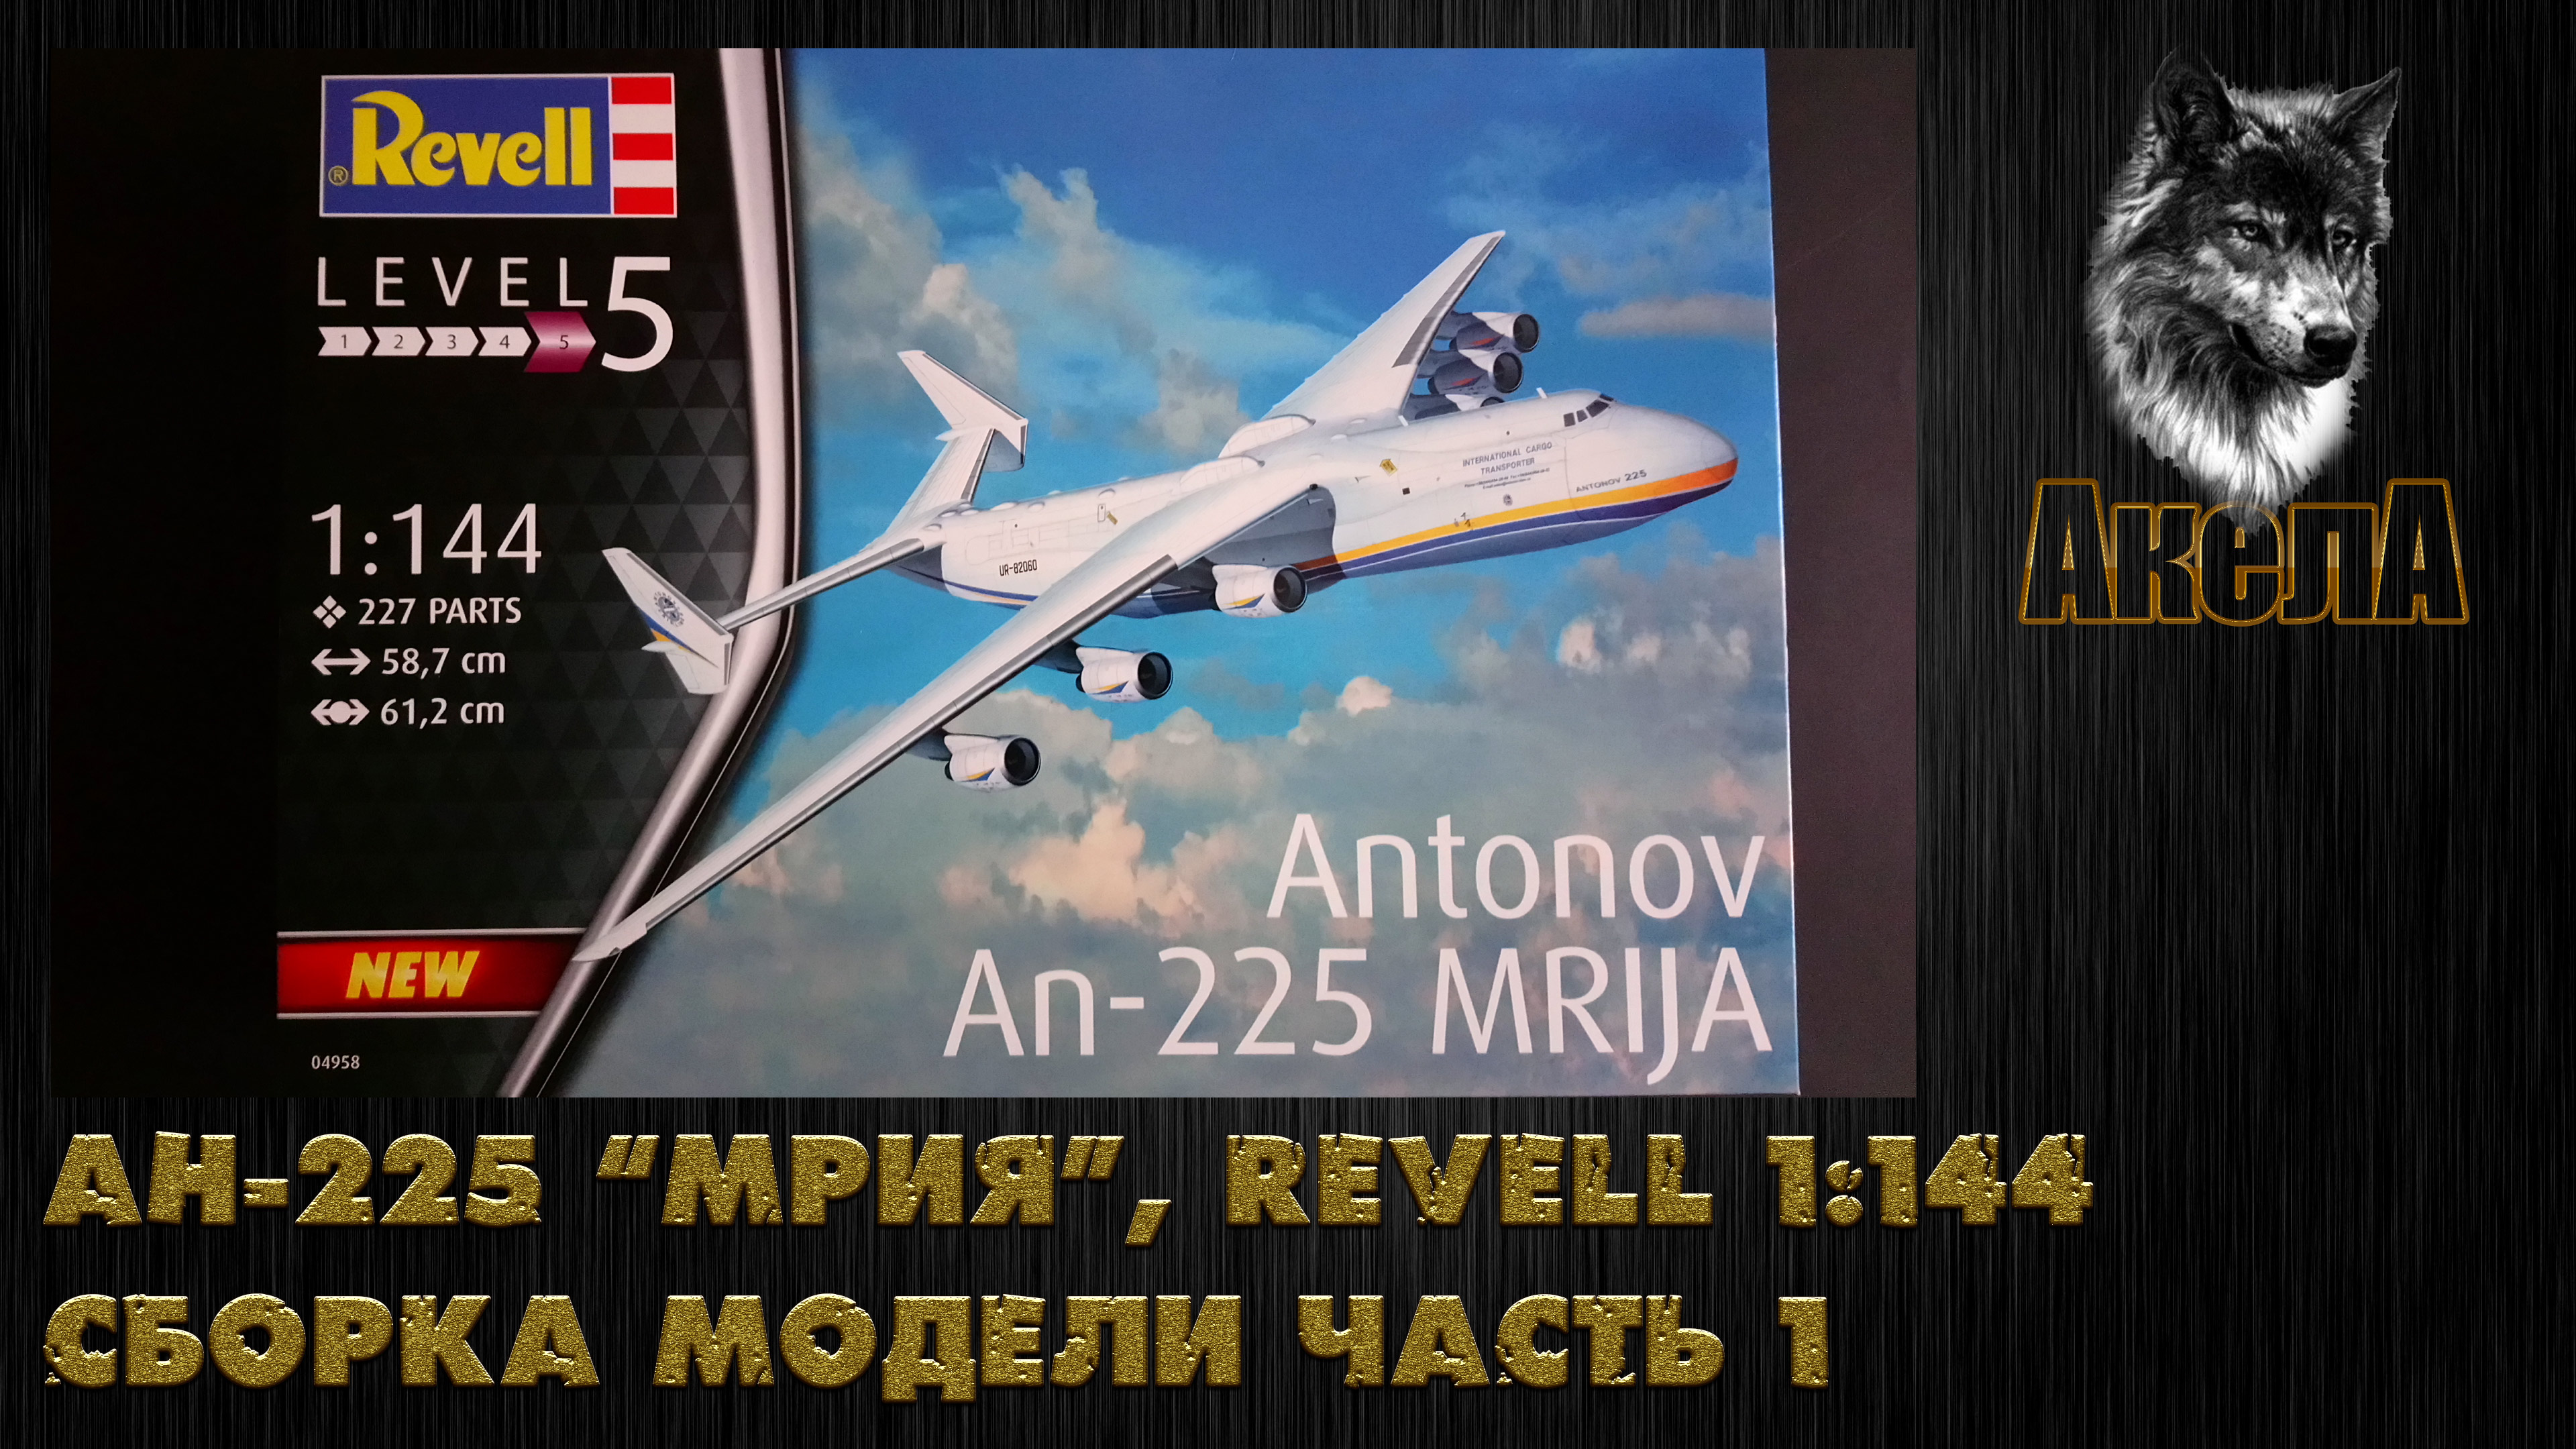 Ан-225 "Мрия", Revell 1/144, сборка модели, часть 1